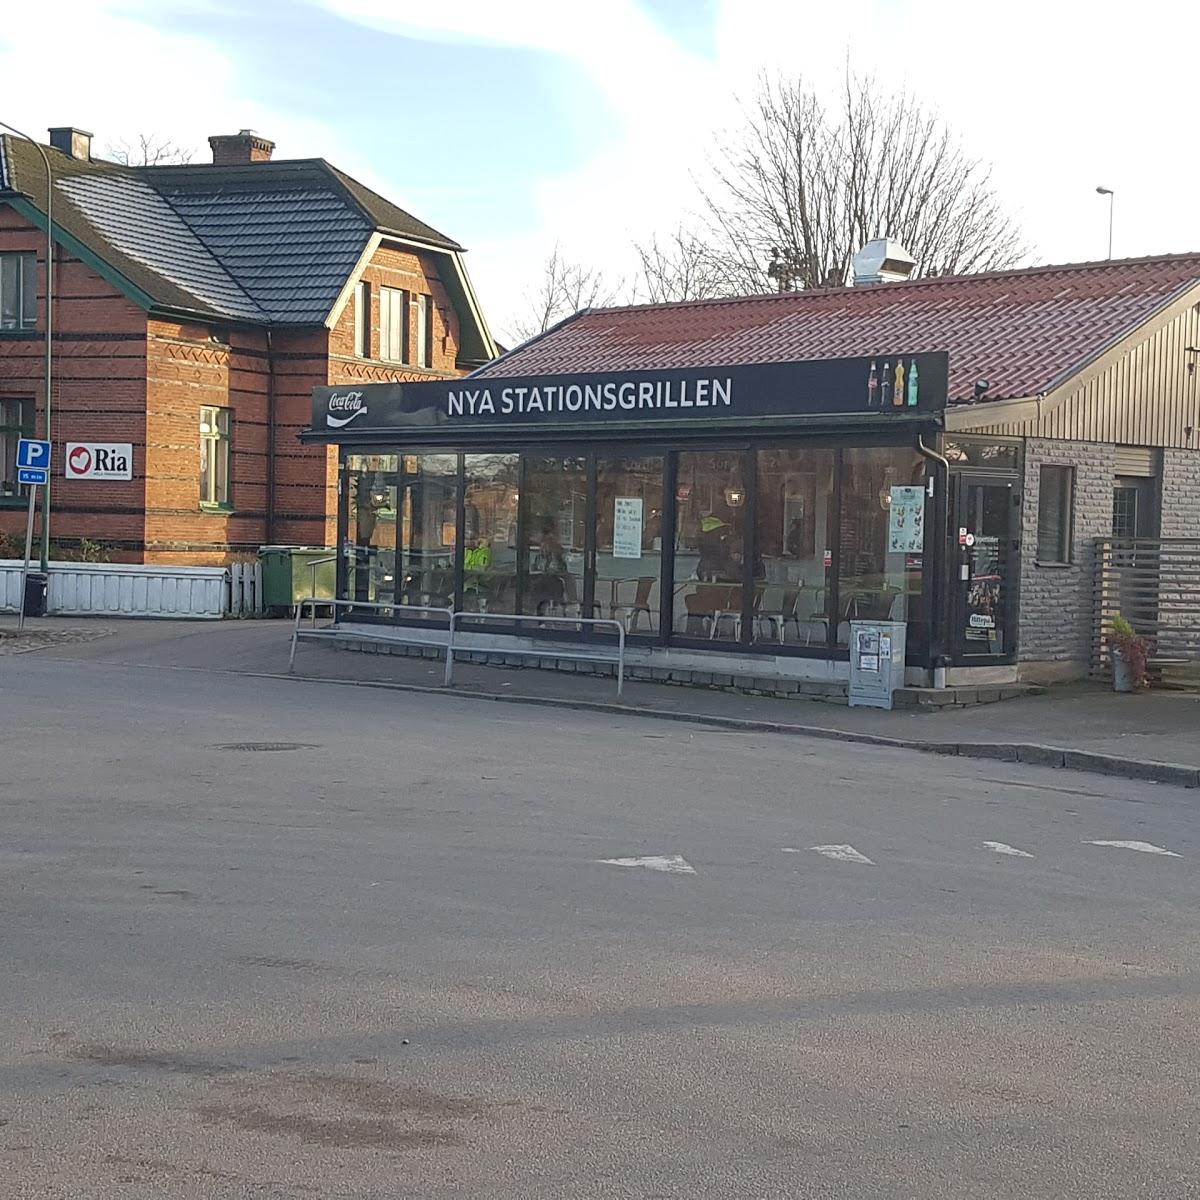 Restaurant "Nya Stationsgrillen" in Falkenberg